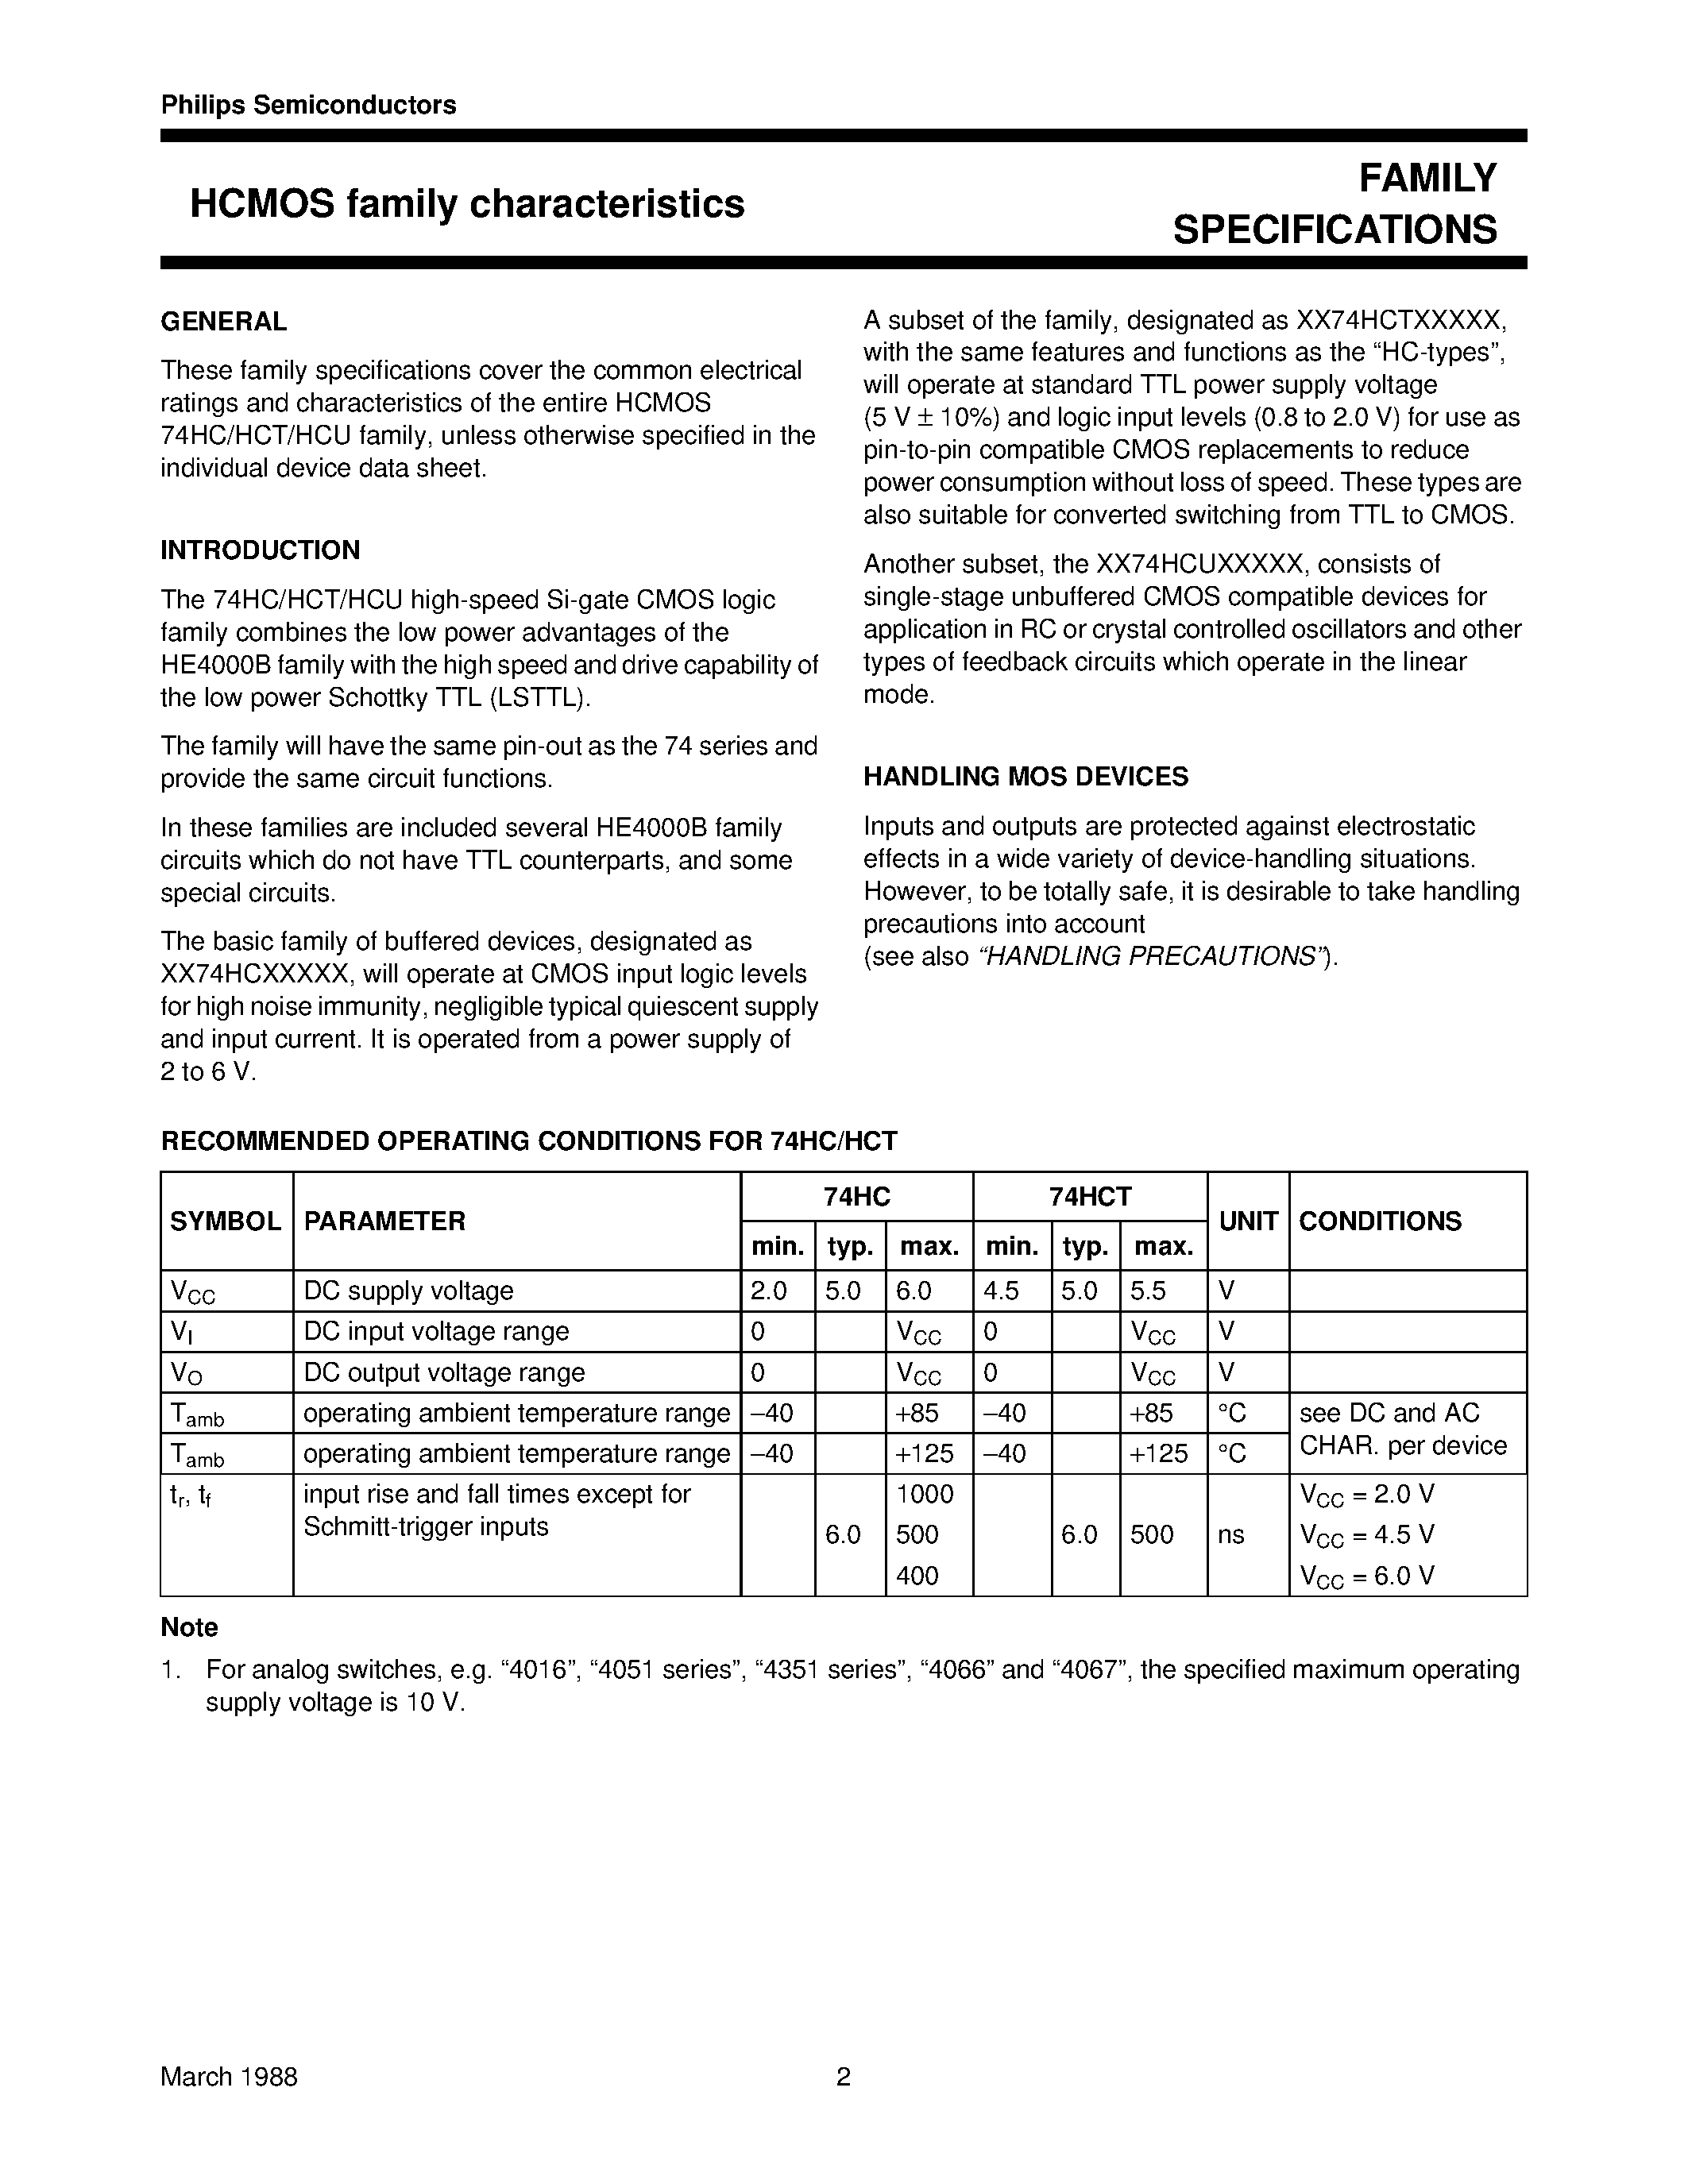 Datasheet 74HCU - HCMOS family characteristics page 2